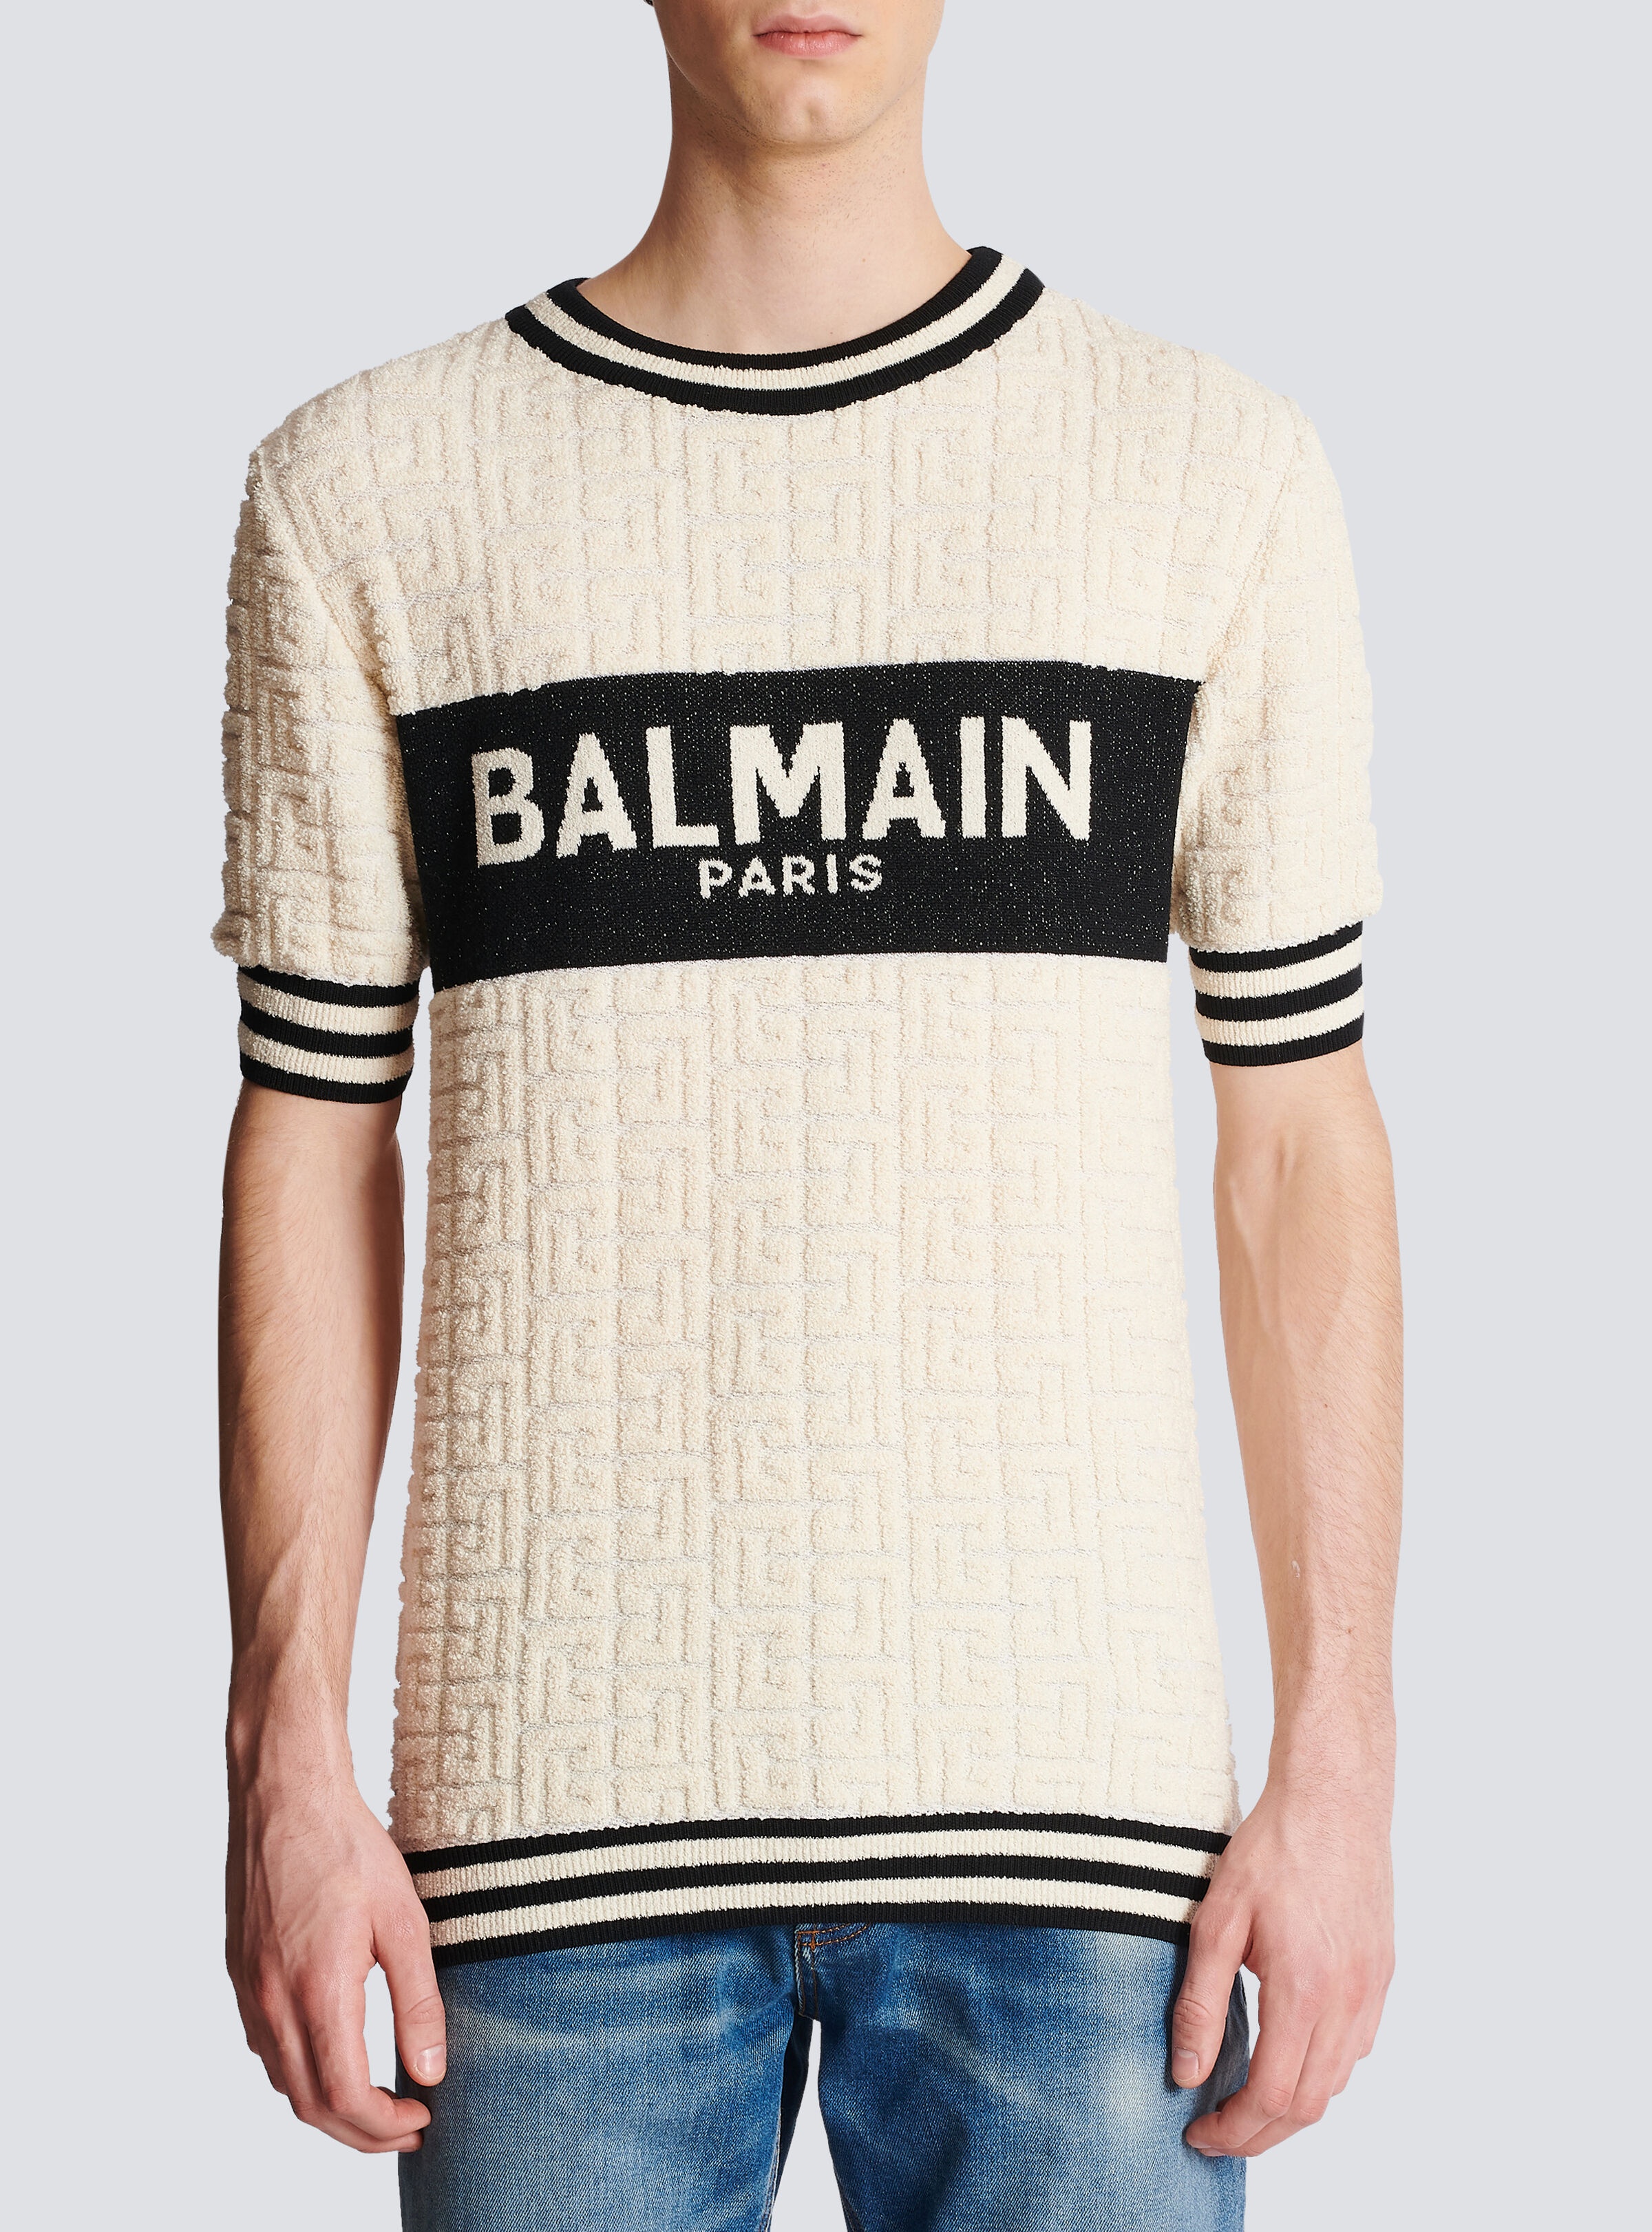 Balmain T-shirt in cotton